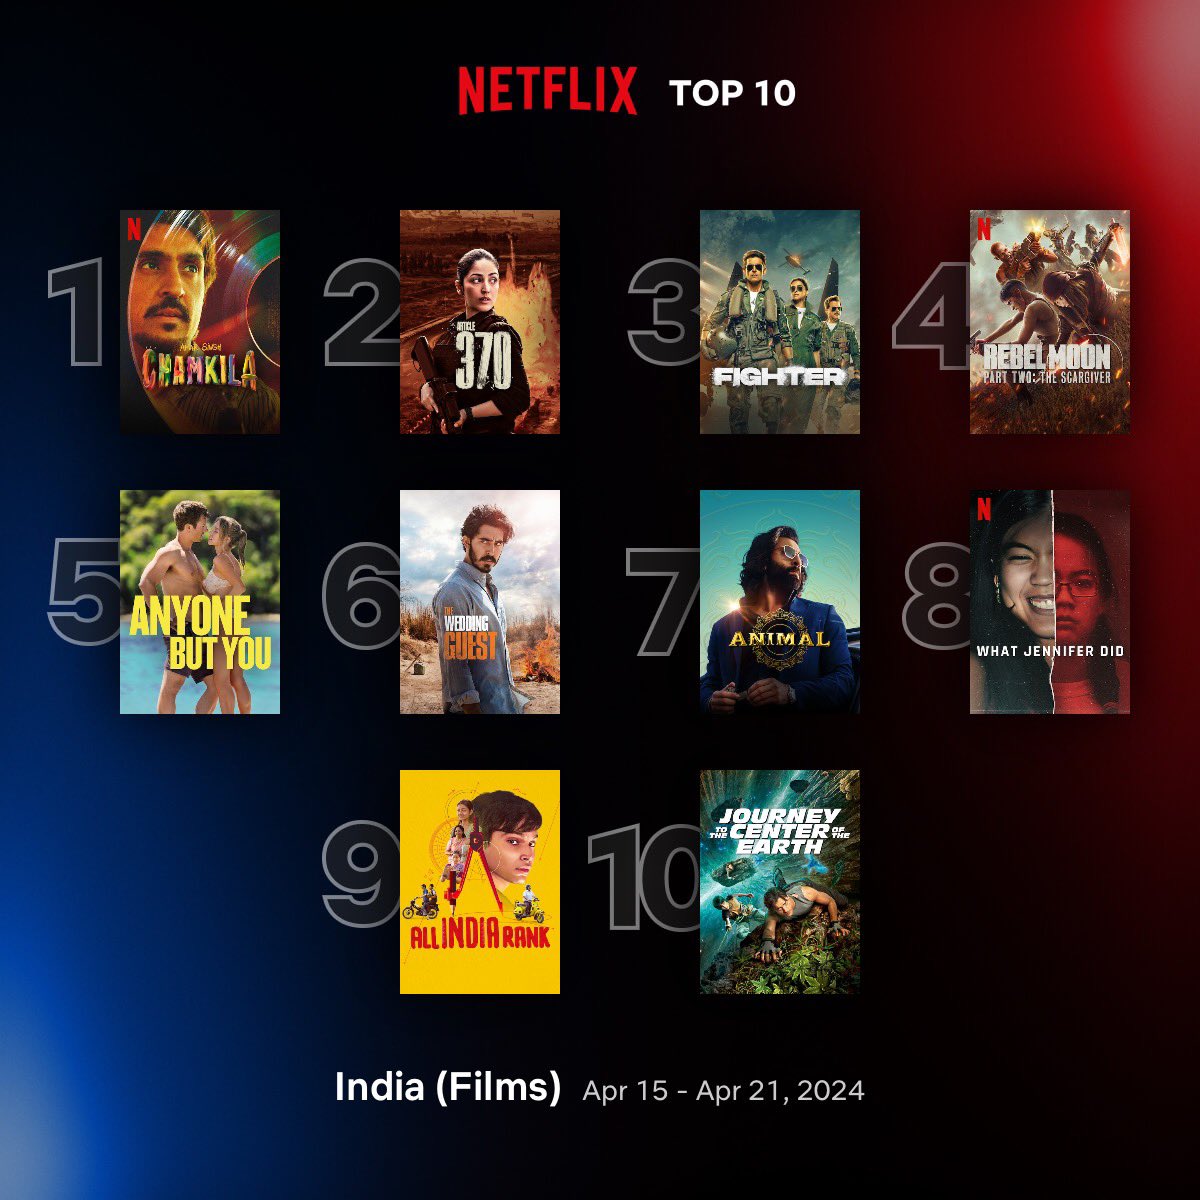 Most Viewed Indian Films on Netflix in 2024: 

1. #Fighter - 14M
2. #Animal - 13.6M
3. #Dunki - 10.8M
4. #Bhakshak - 10.4M
5. #MurderMubarak - 6.3M
6. #AmarSinghChamkila - 5.3M*
7. #GunturKaaram - 4.9M
8. #HiNanna - 4.2M
9. #AnweshippinKandethum - 3.6M
10. #Salaar - 3.5M